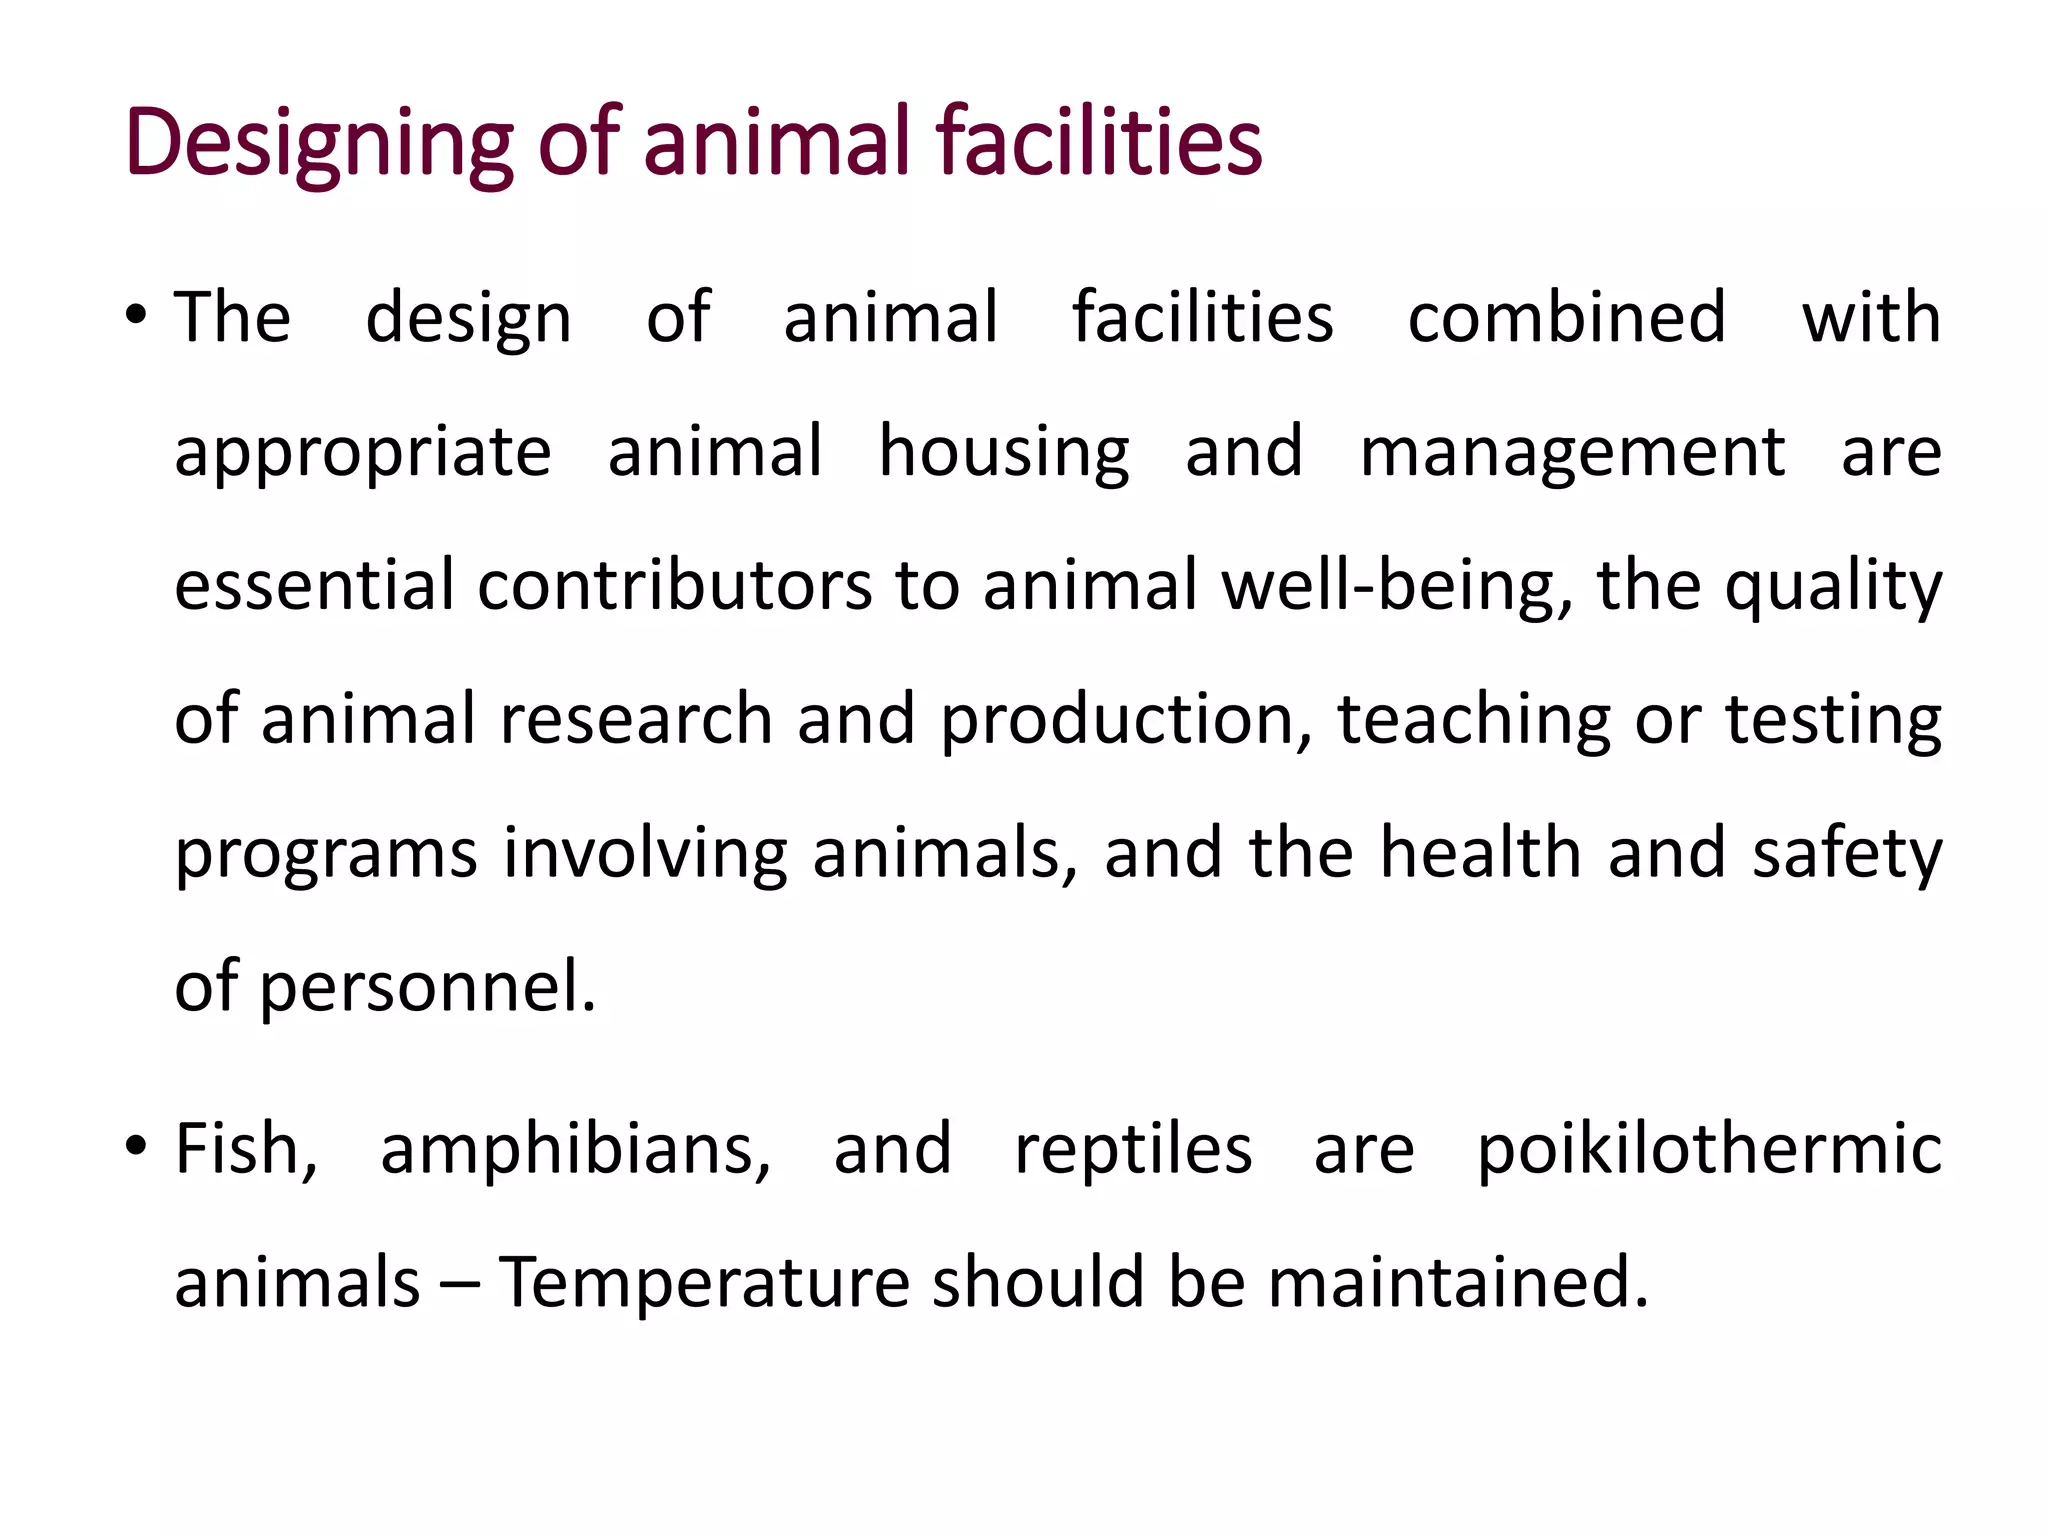 Terrestrial laboratory animals